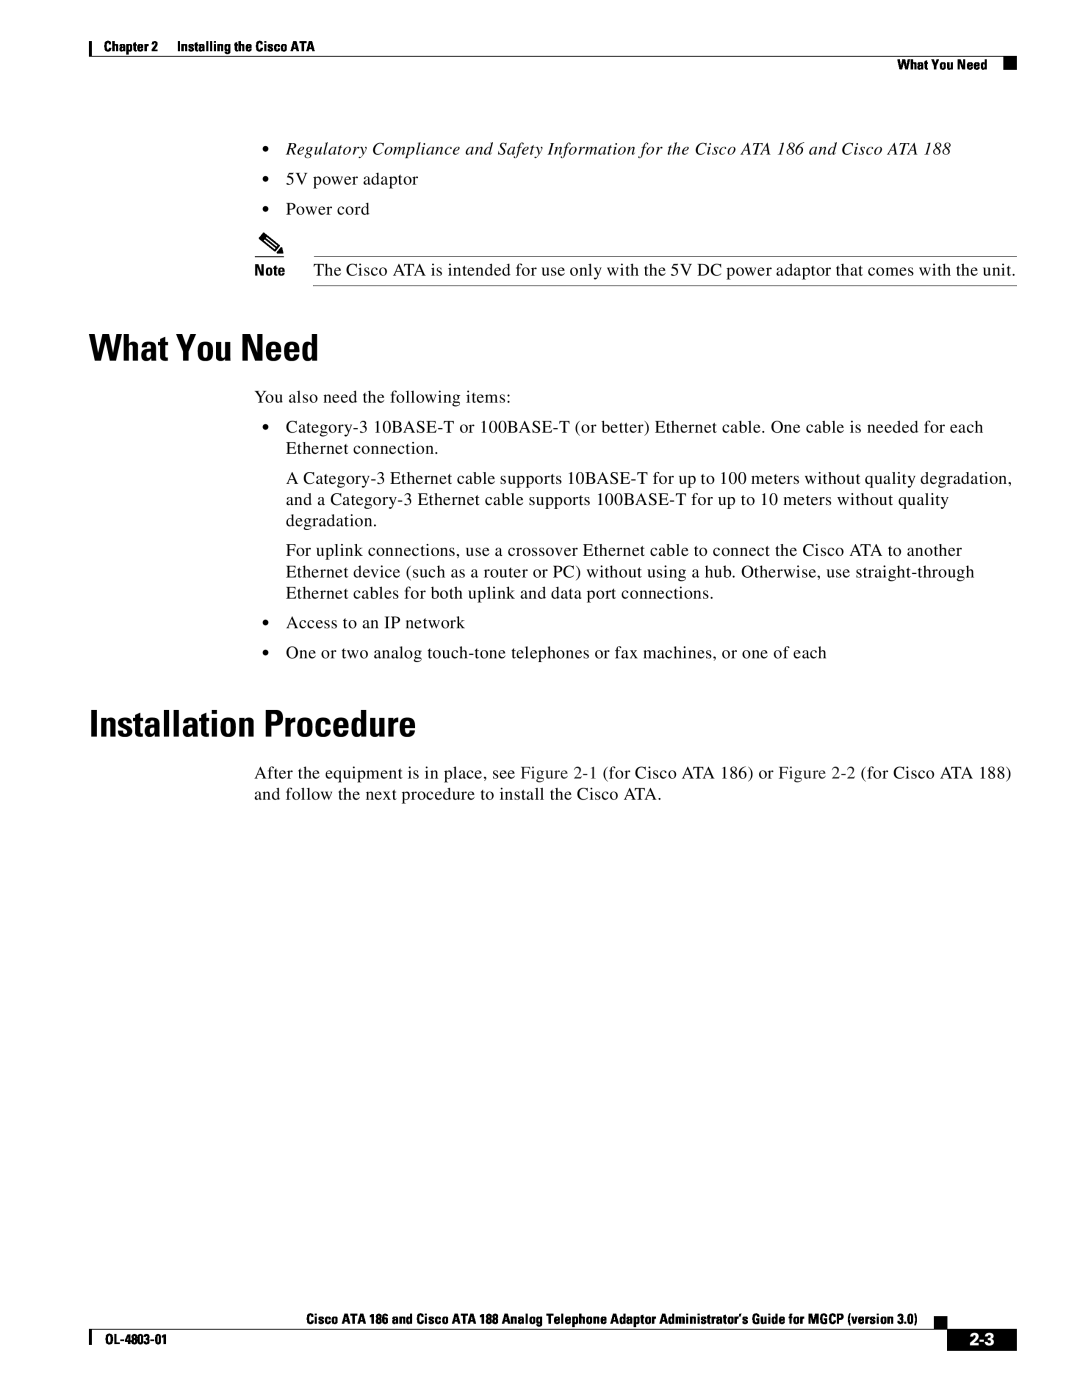 Cisco Systems ATA 188, ATA 186 manual What You Need, Installation Procedure 